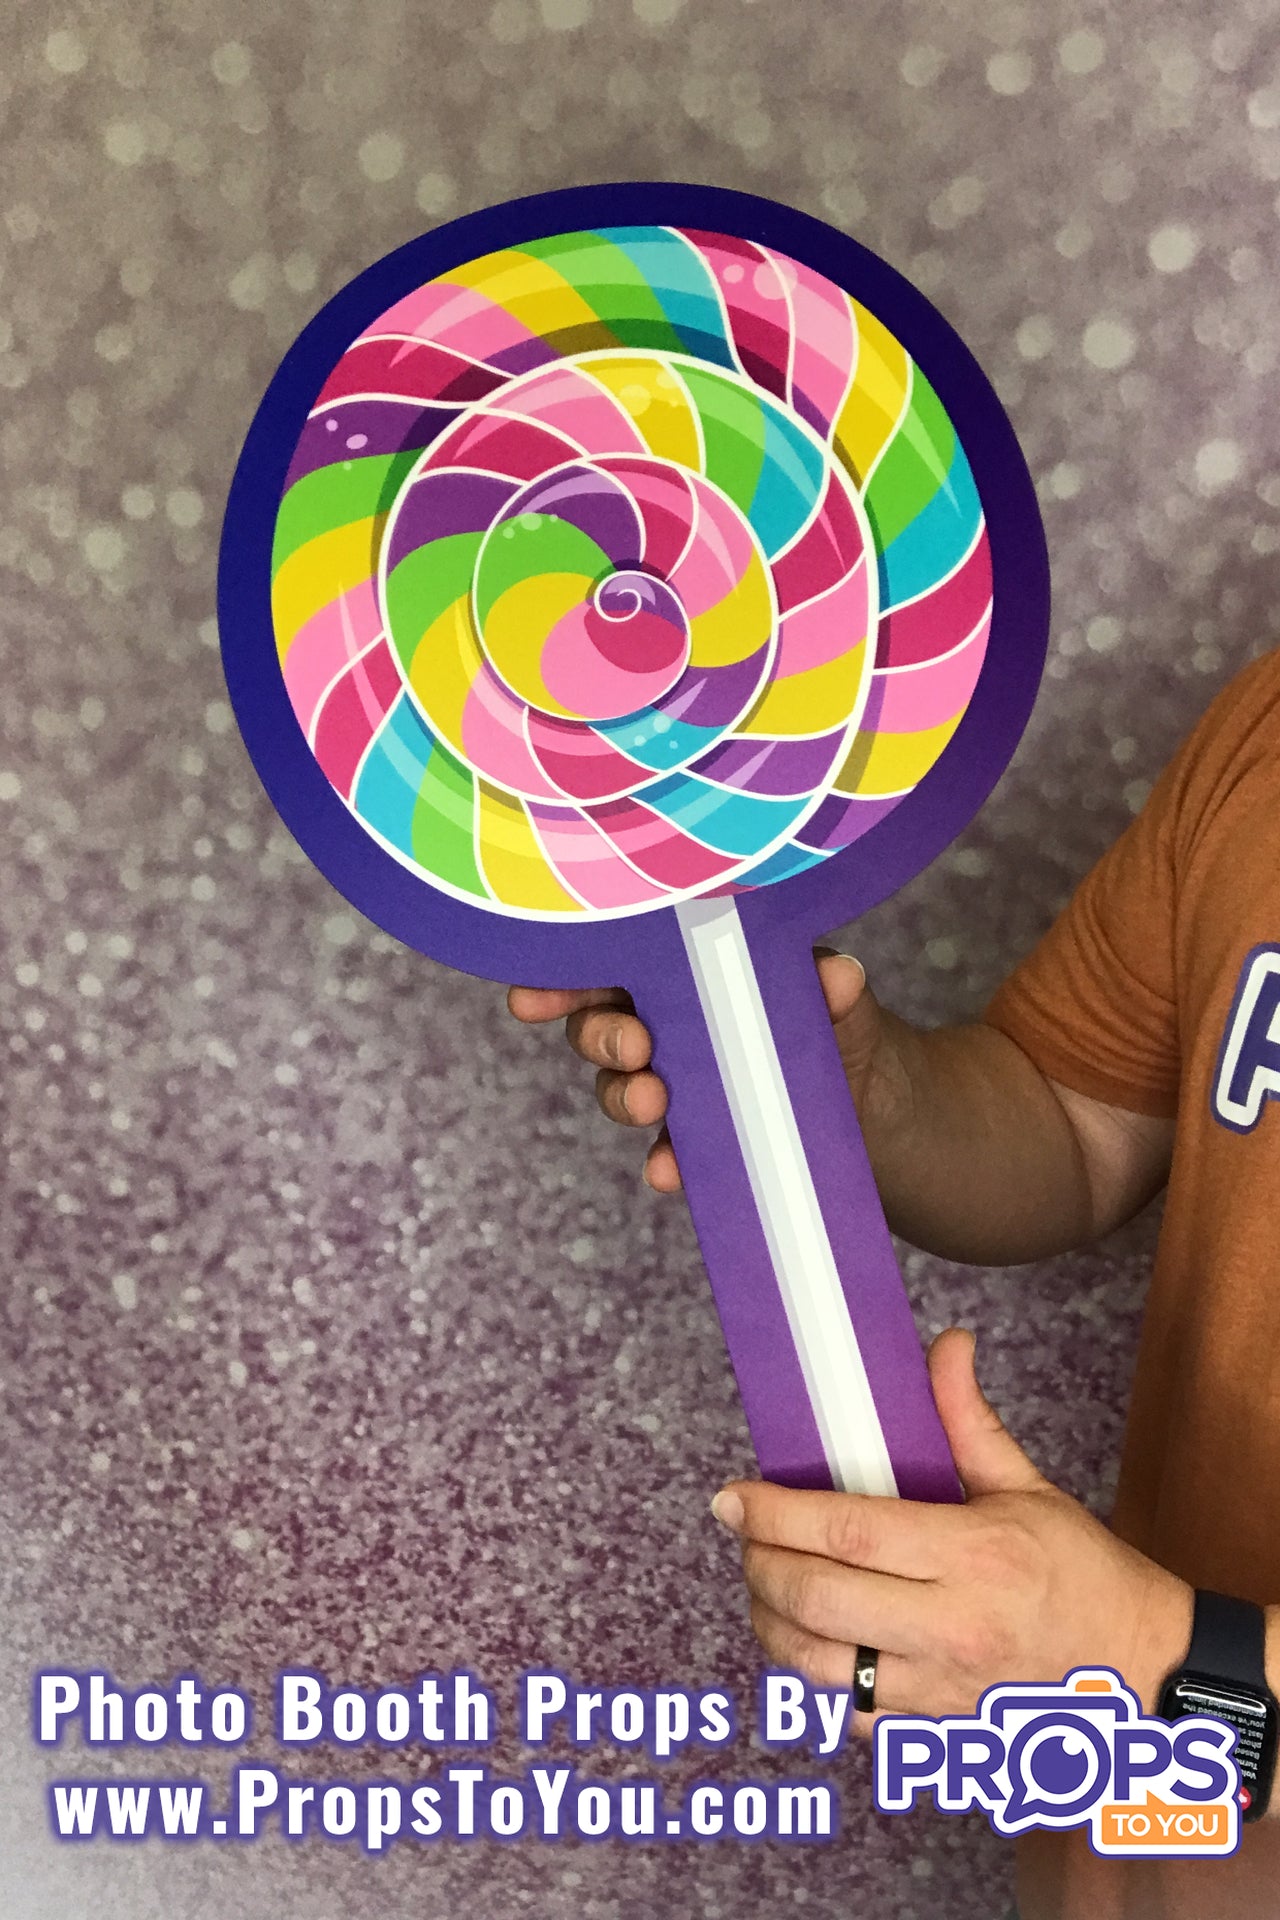 BIG Props: Candy! Rainbow/Neon Swirl Lollipop Photo Booth Prop